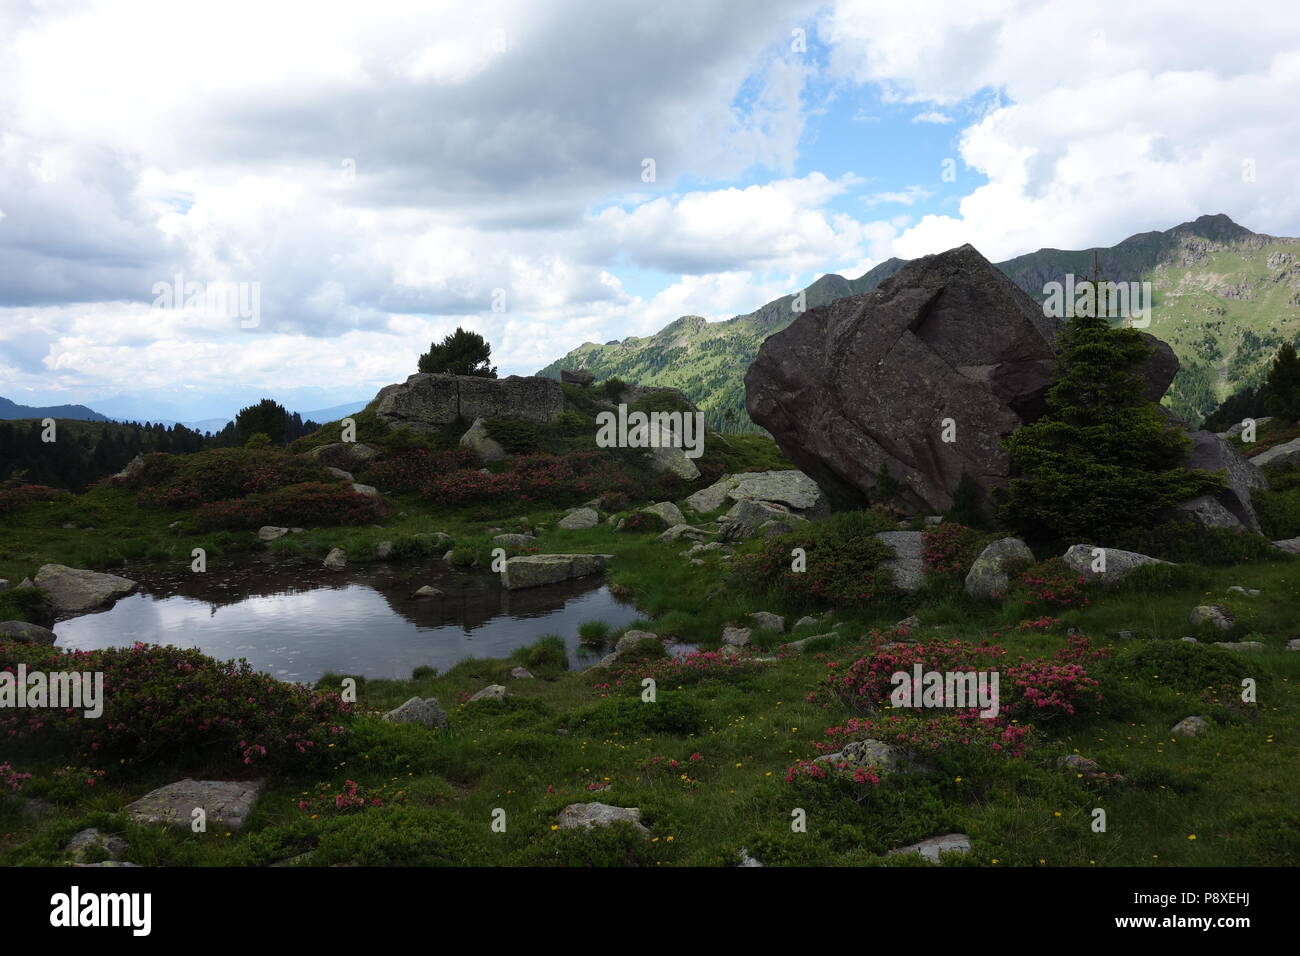 Lagorai mountain range in the eastern Alps in Trentino, Italy Stock Photo